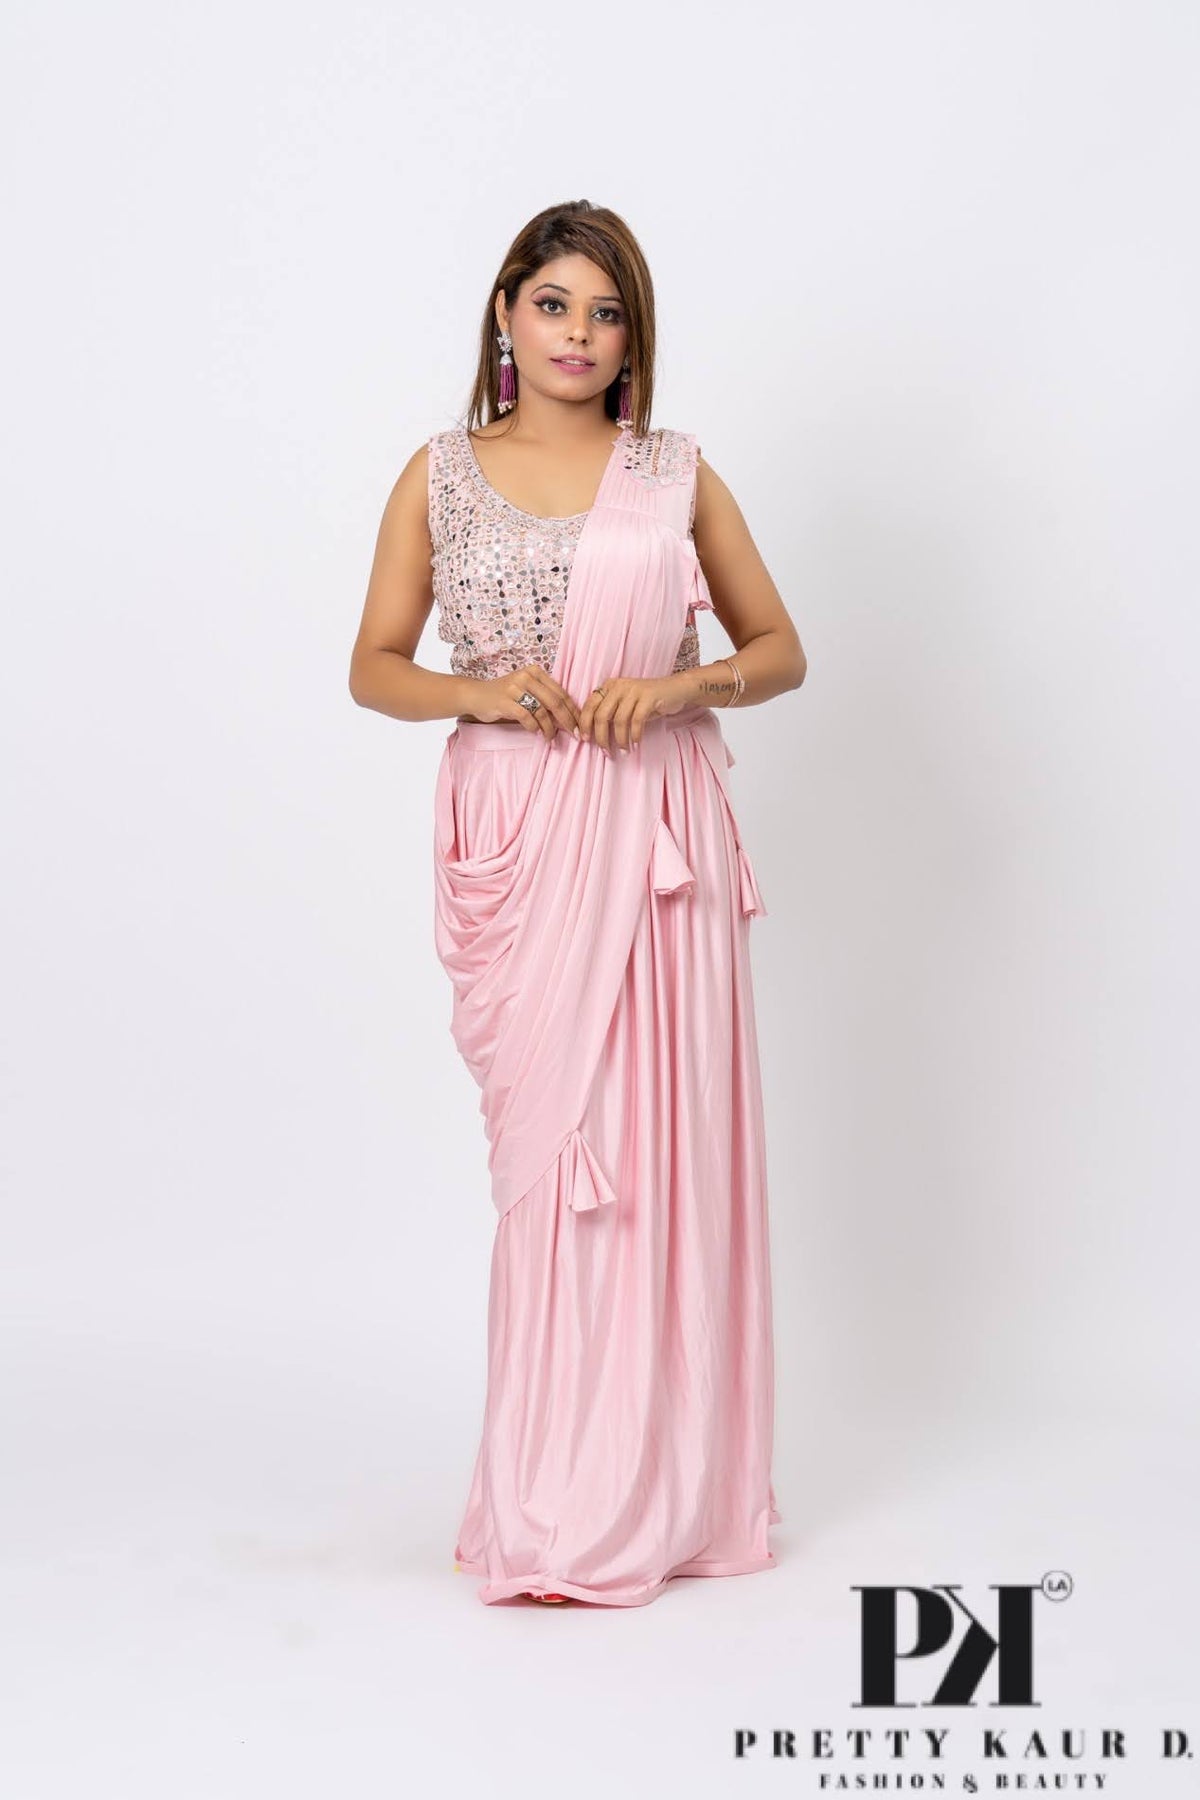 Pretty-Kaur-fashion-beauty-Ready-to-Wear-Designer-Pink-Saree-1